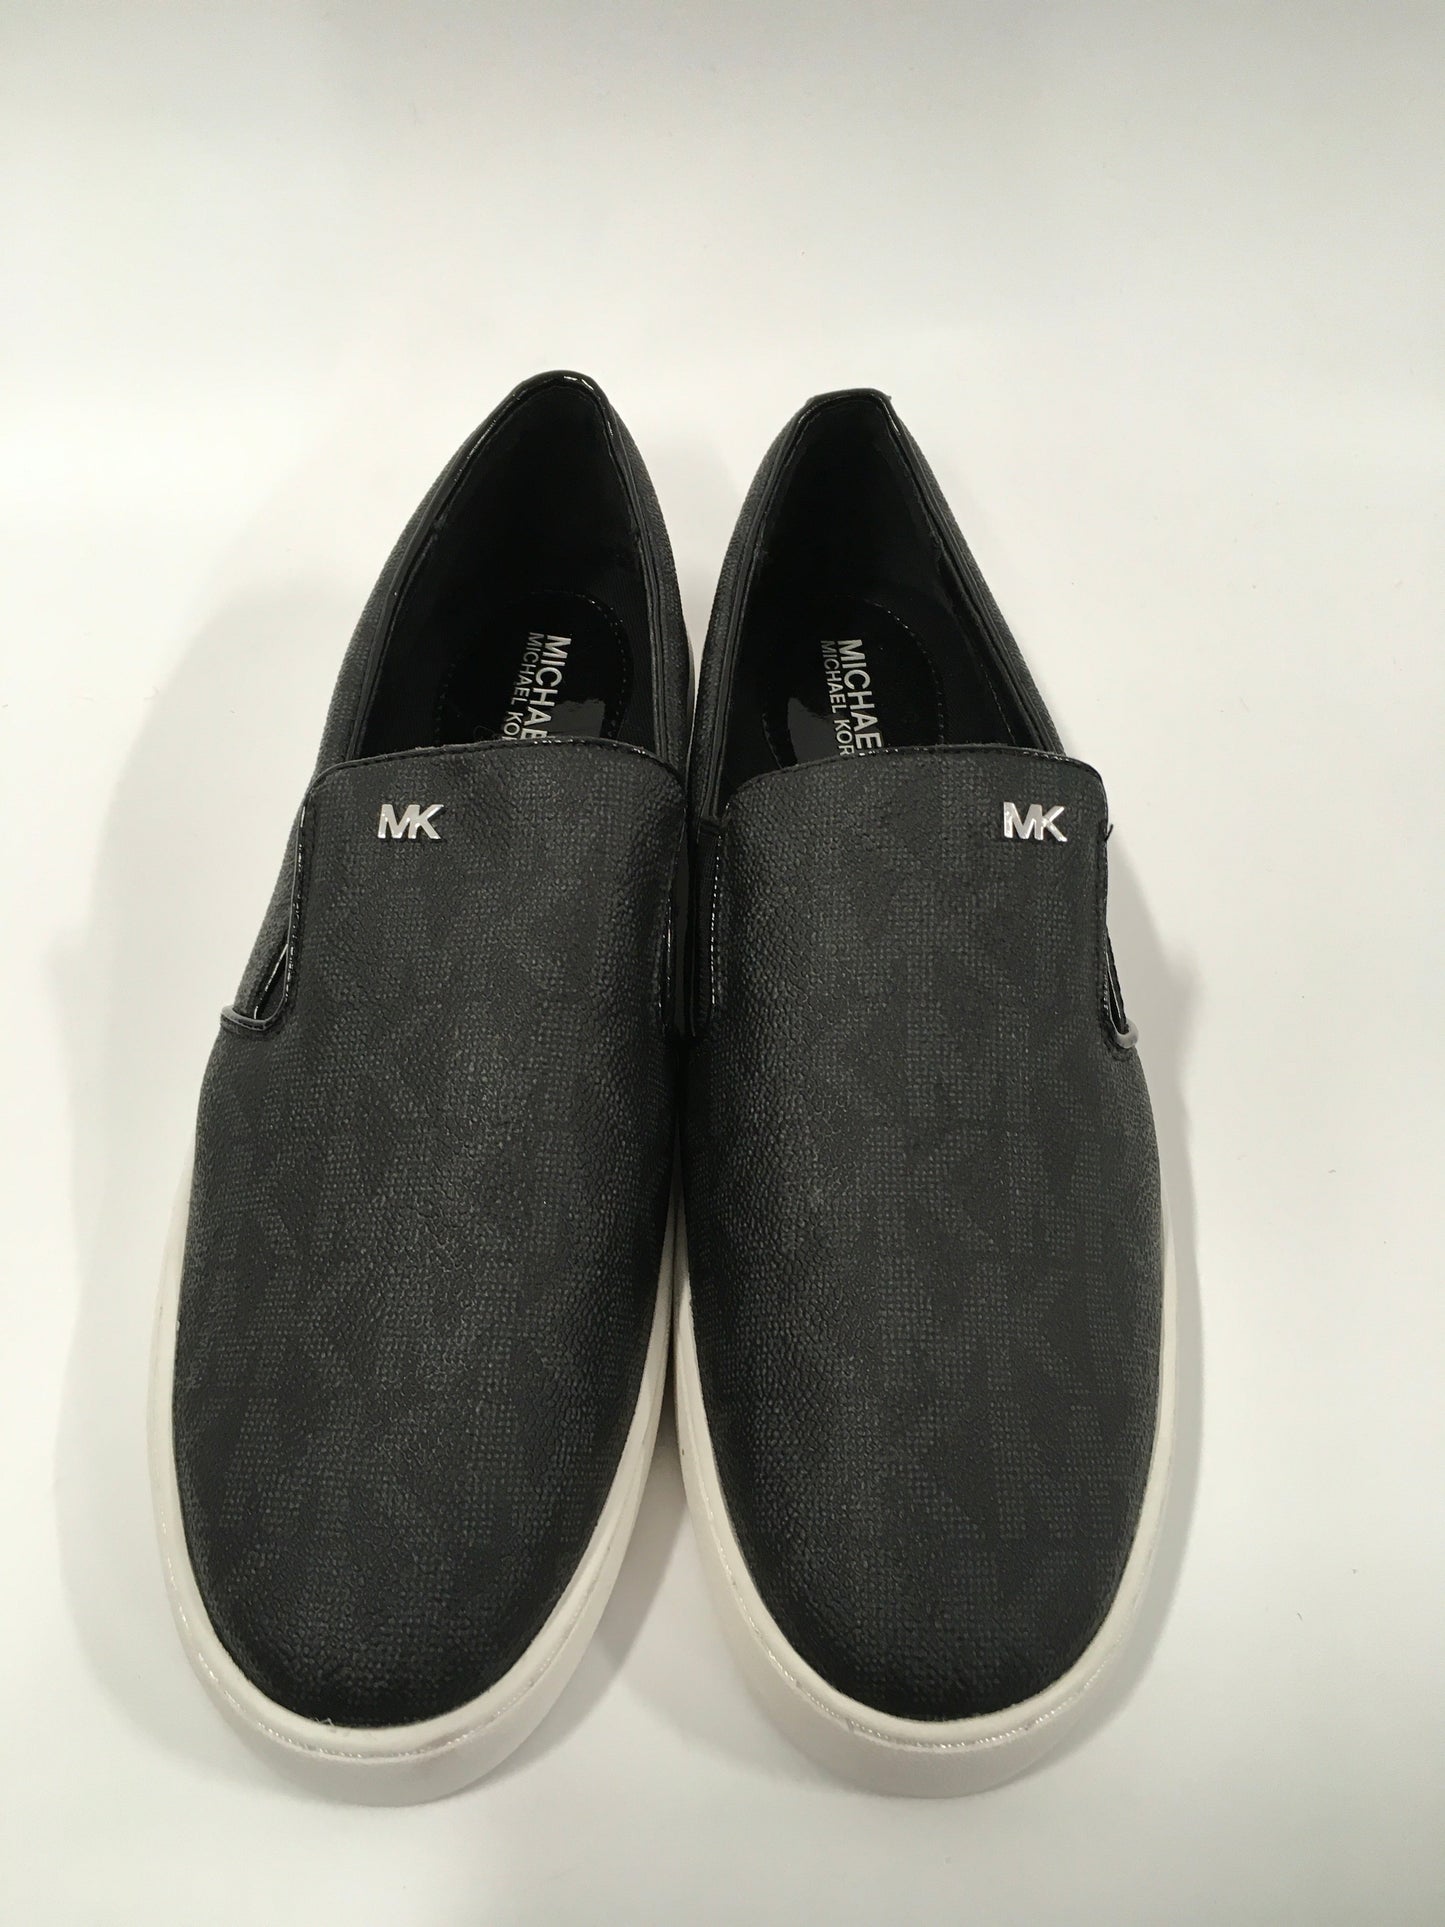 Black Shoes Flats Other Michael Kors, Size 10